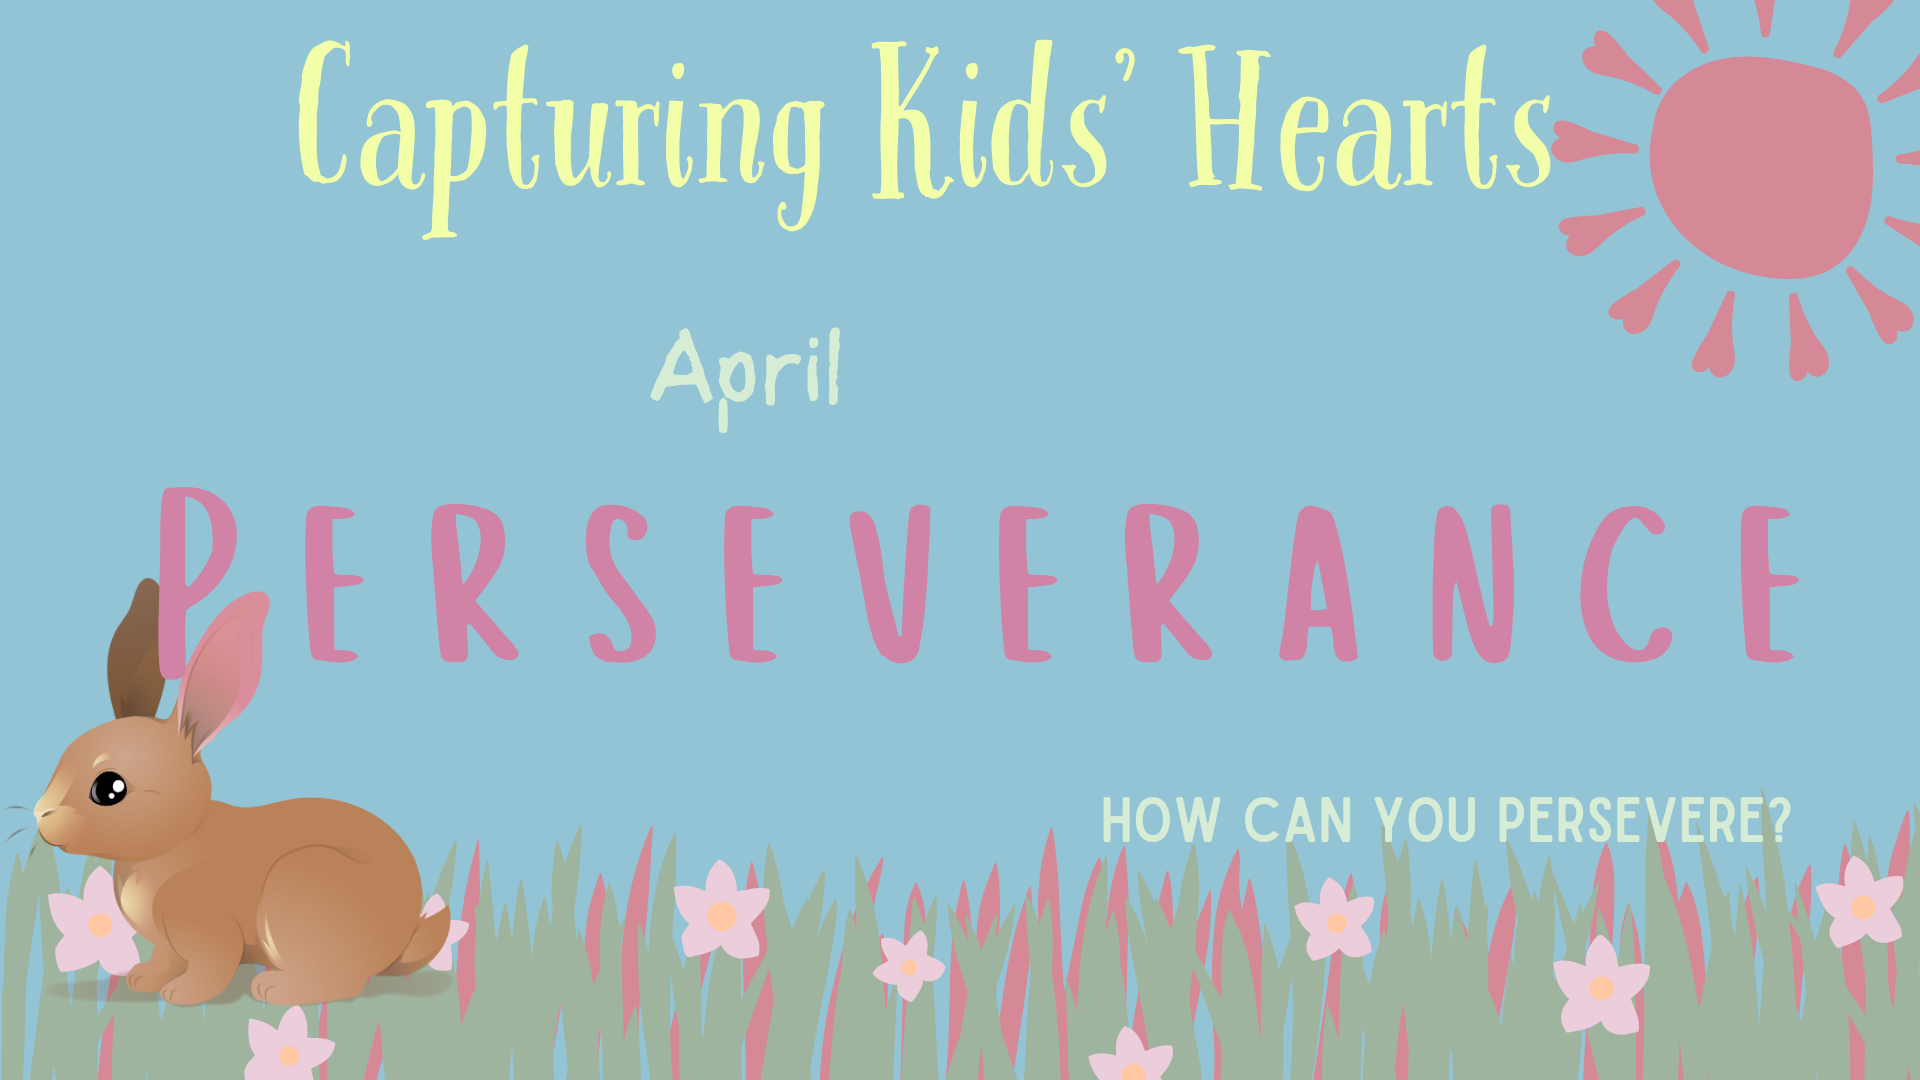 Capturing Kids' Hearts- Perseverance